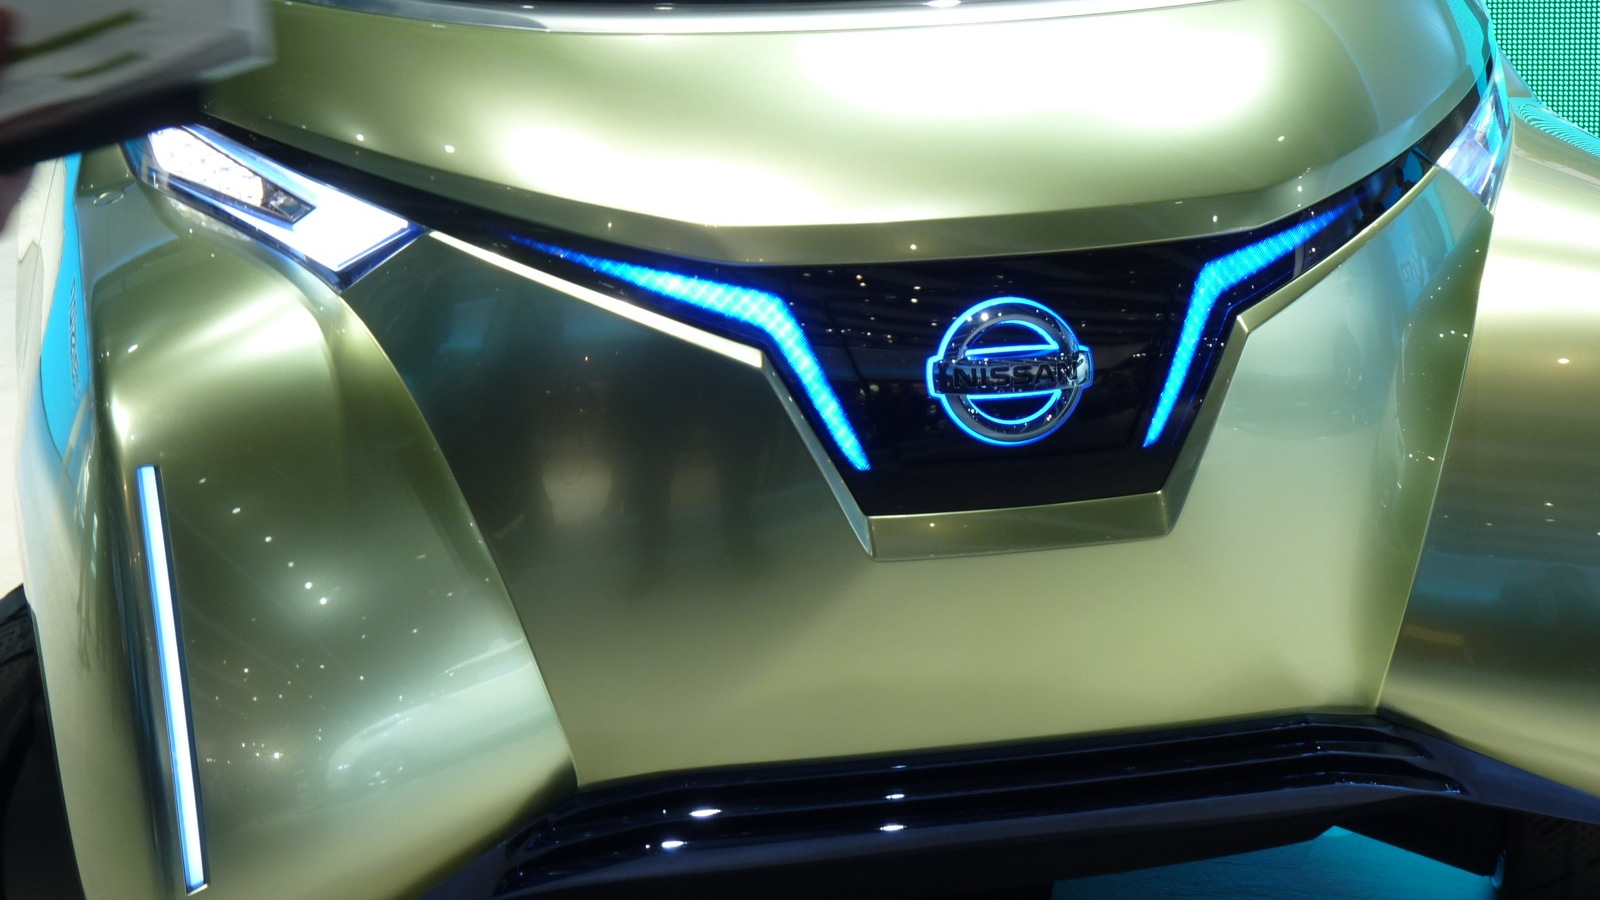 2011 Nissan Pivo3 concept